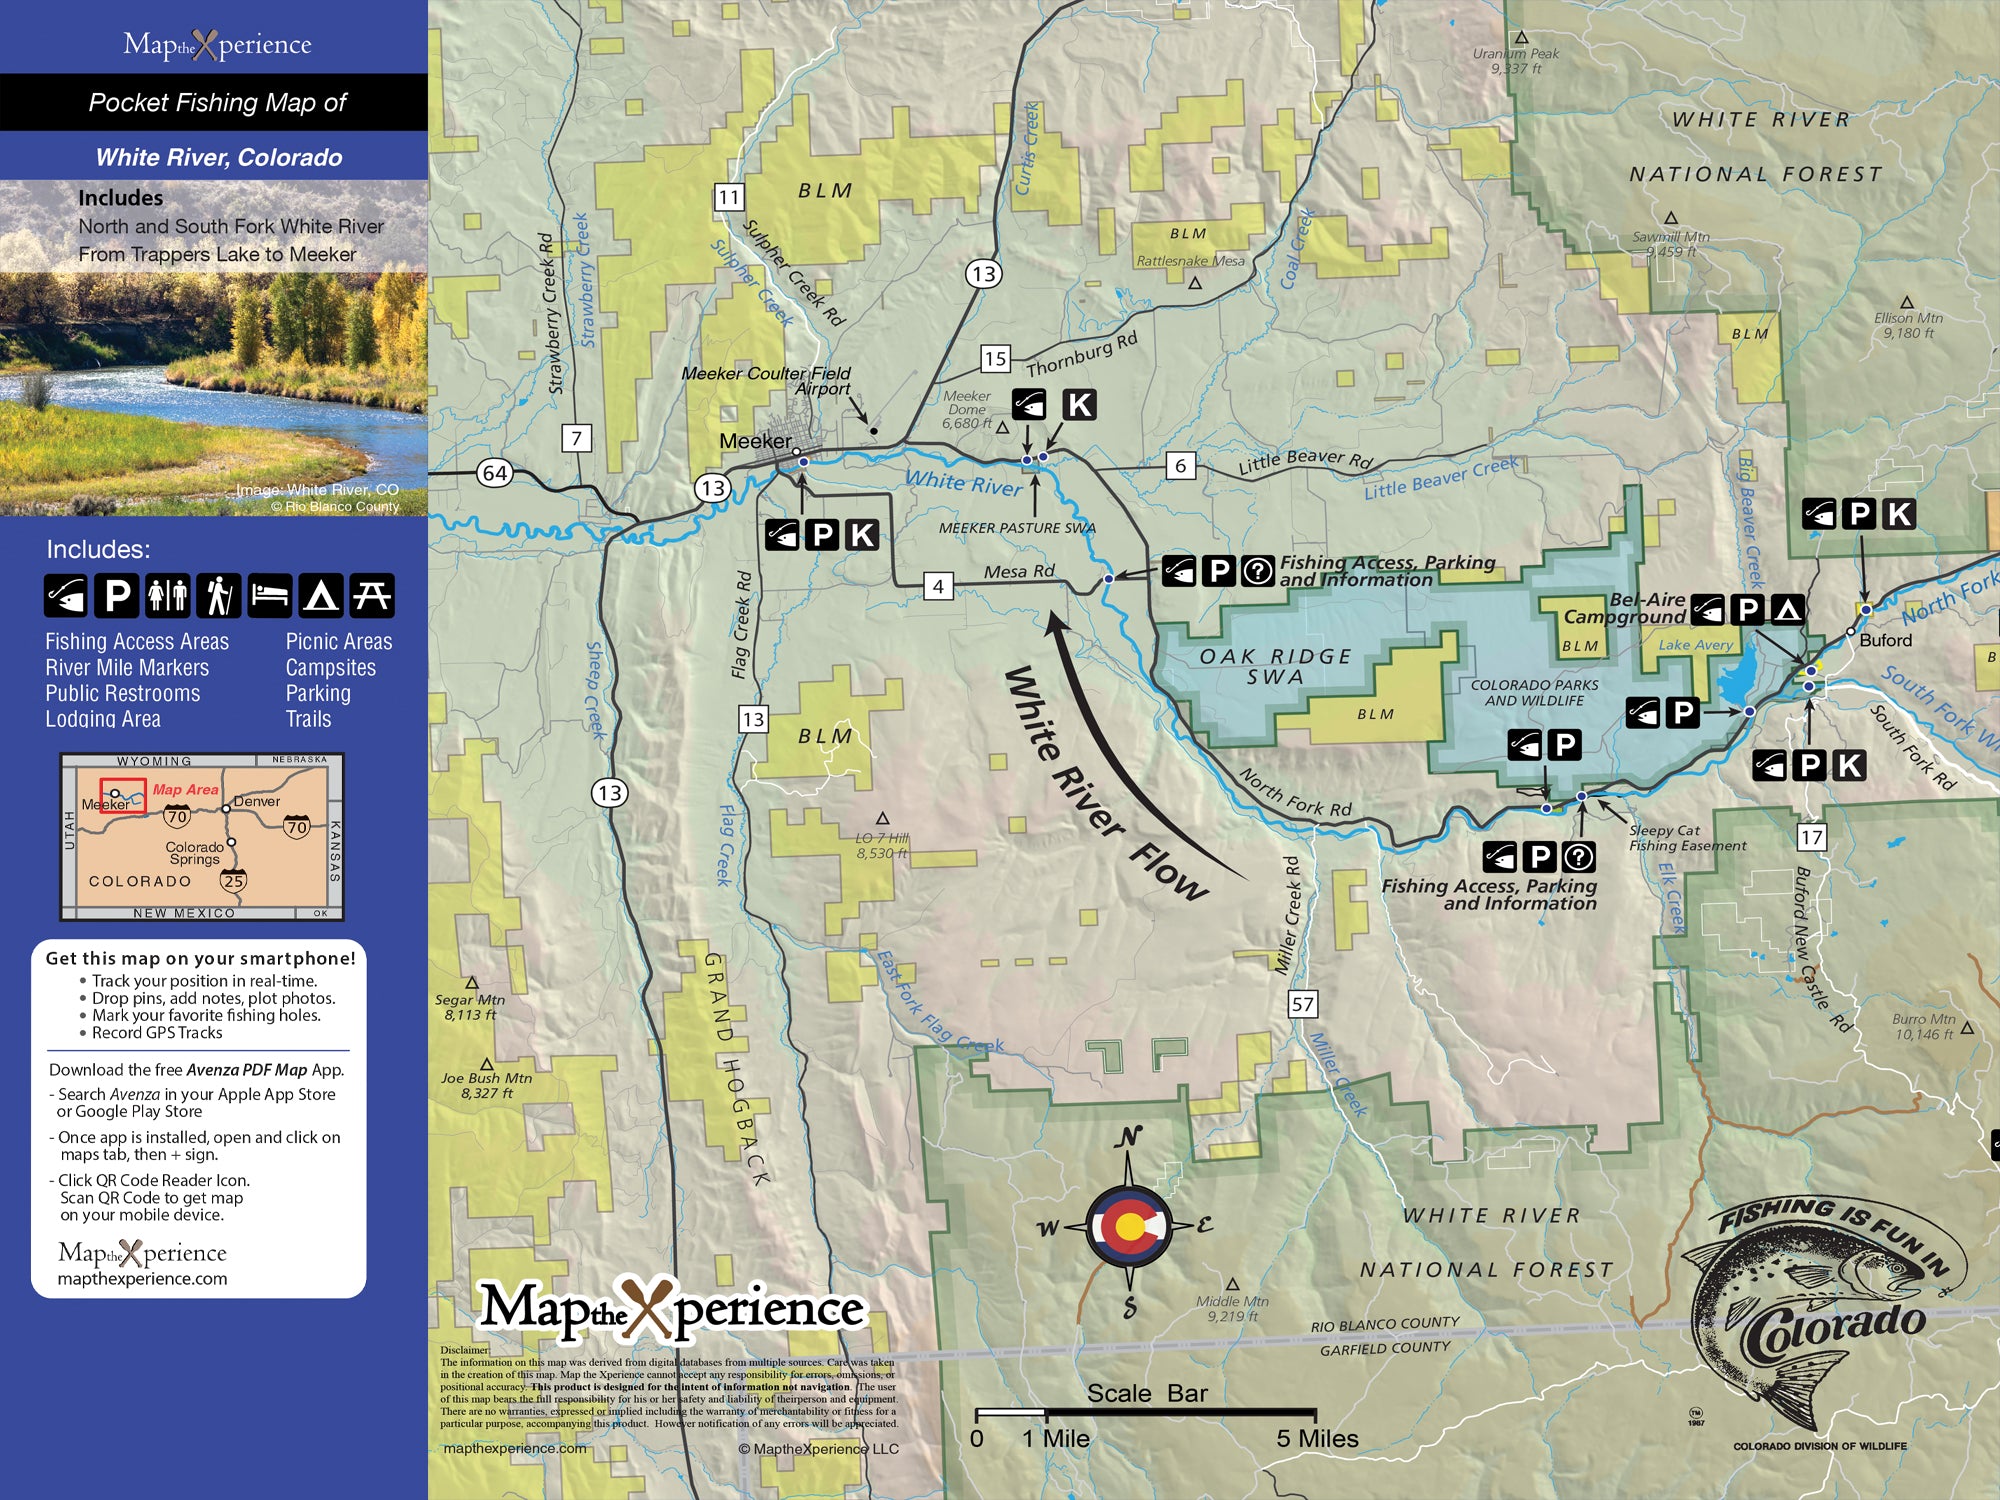 White River, Colorado Pocket Fishing Map